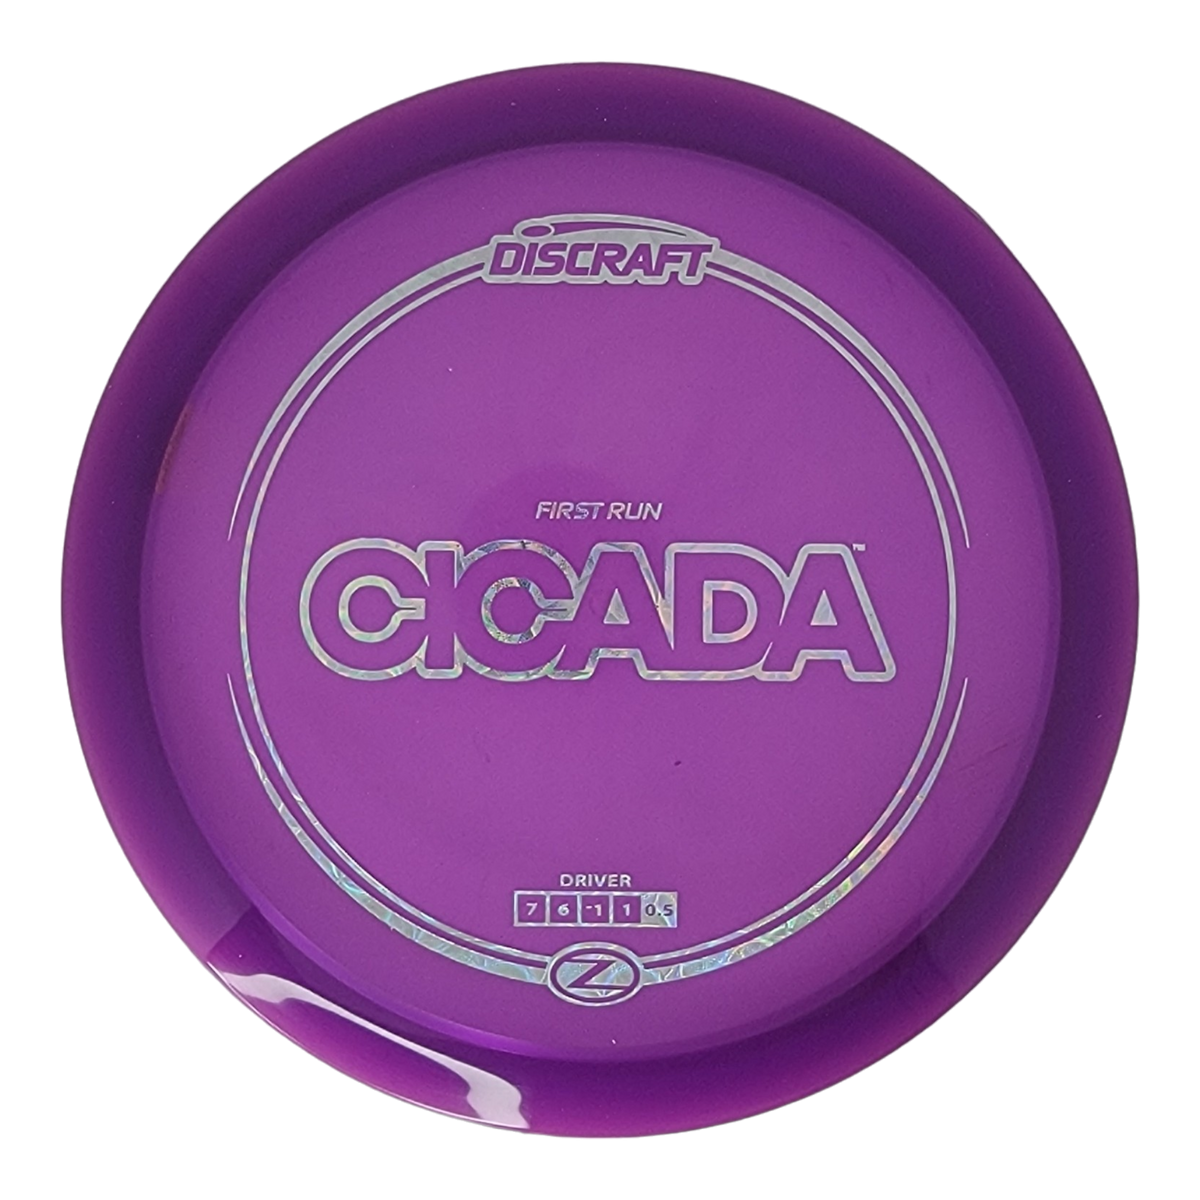 Discraft Z Cicada - First Run